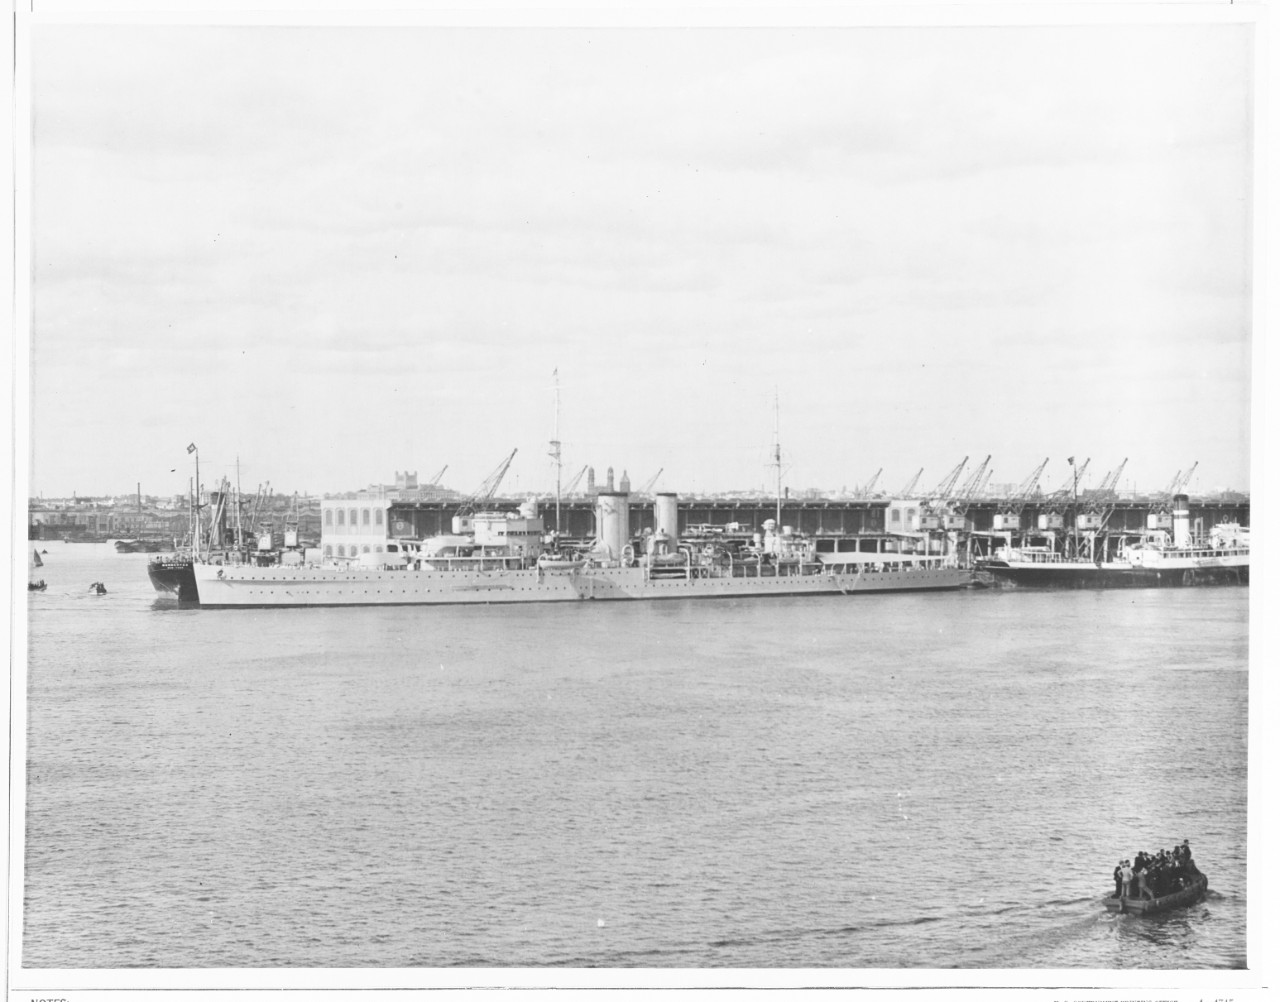 HMS EXETER (British Cruiser, 1929)